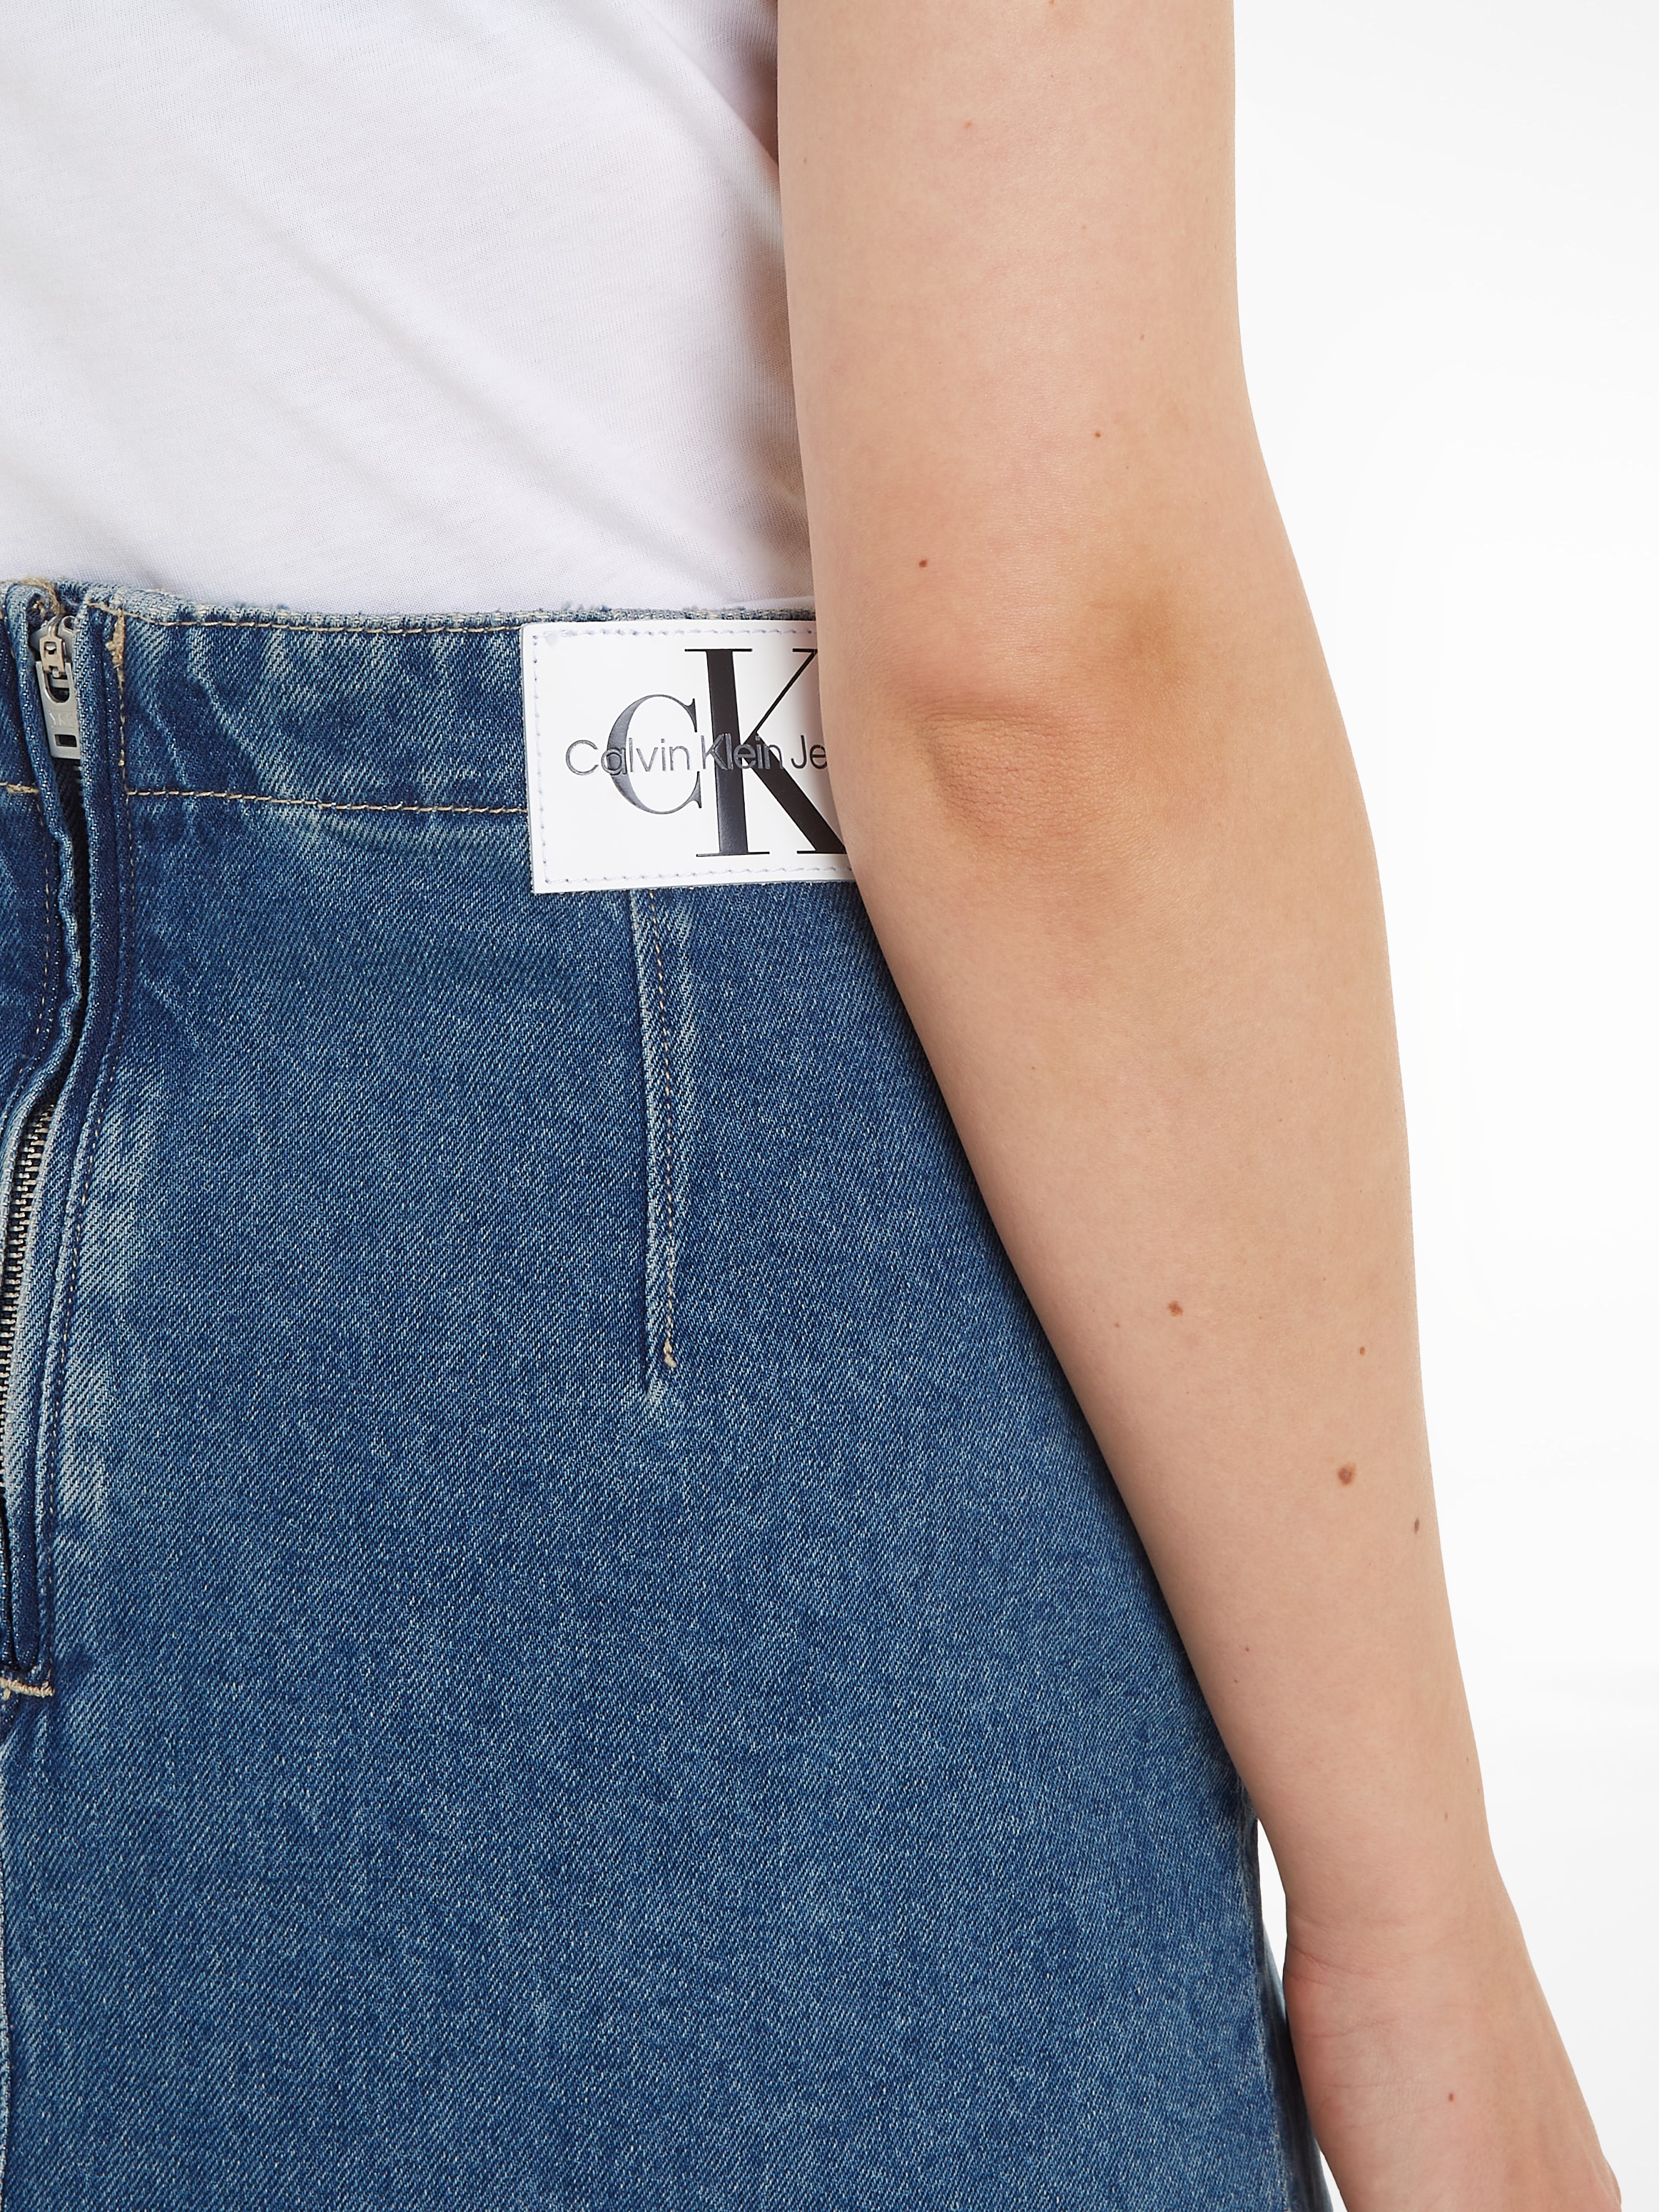 Calvin Klein SKIRT« bei Jeans OTTO »DARTED Jeansrock DENIM online